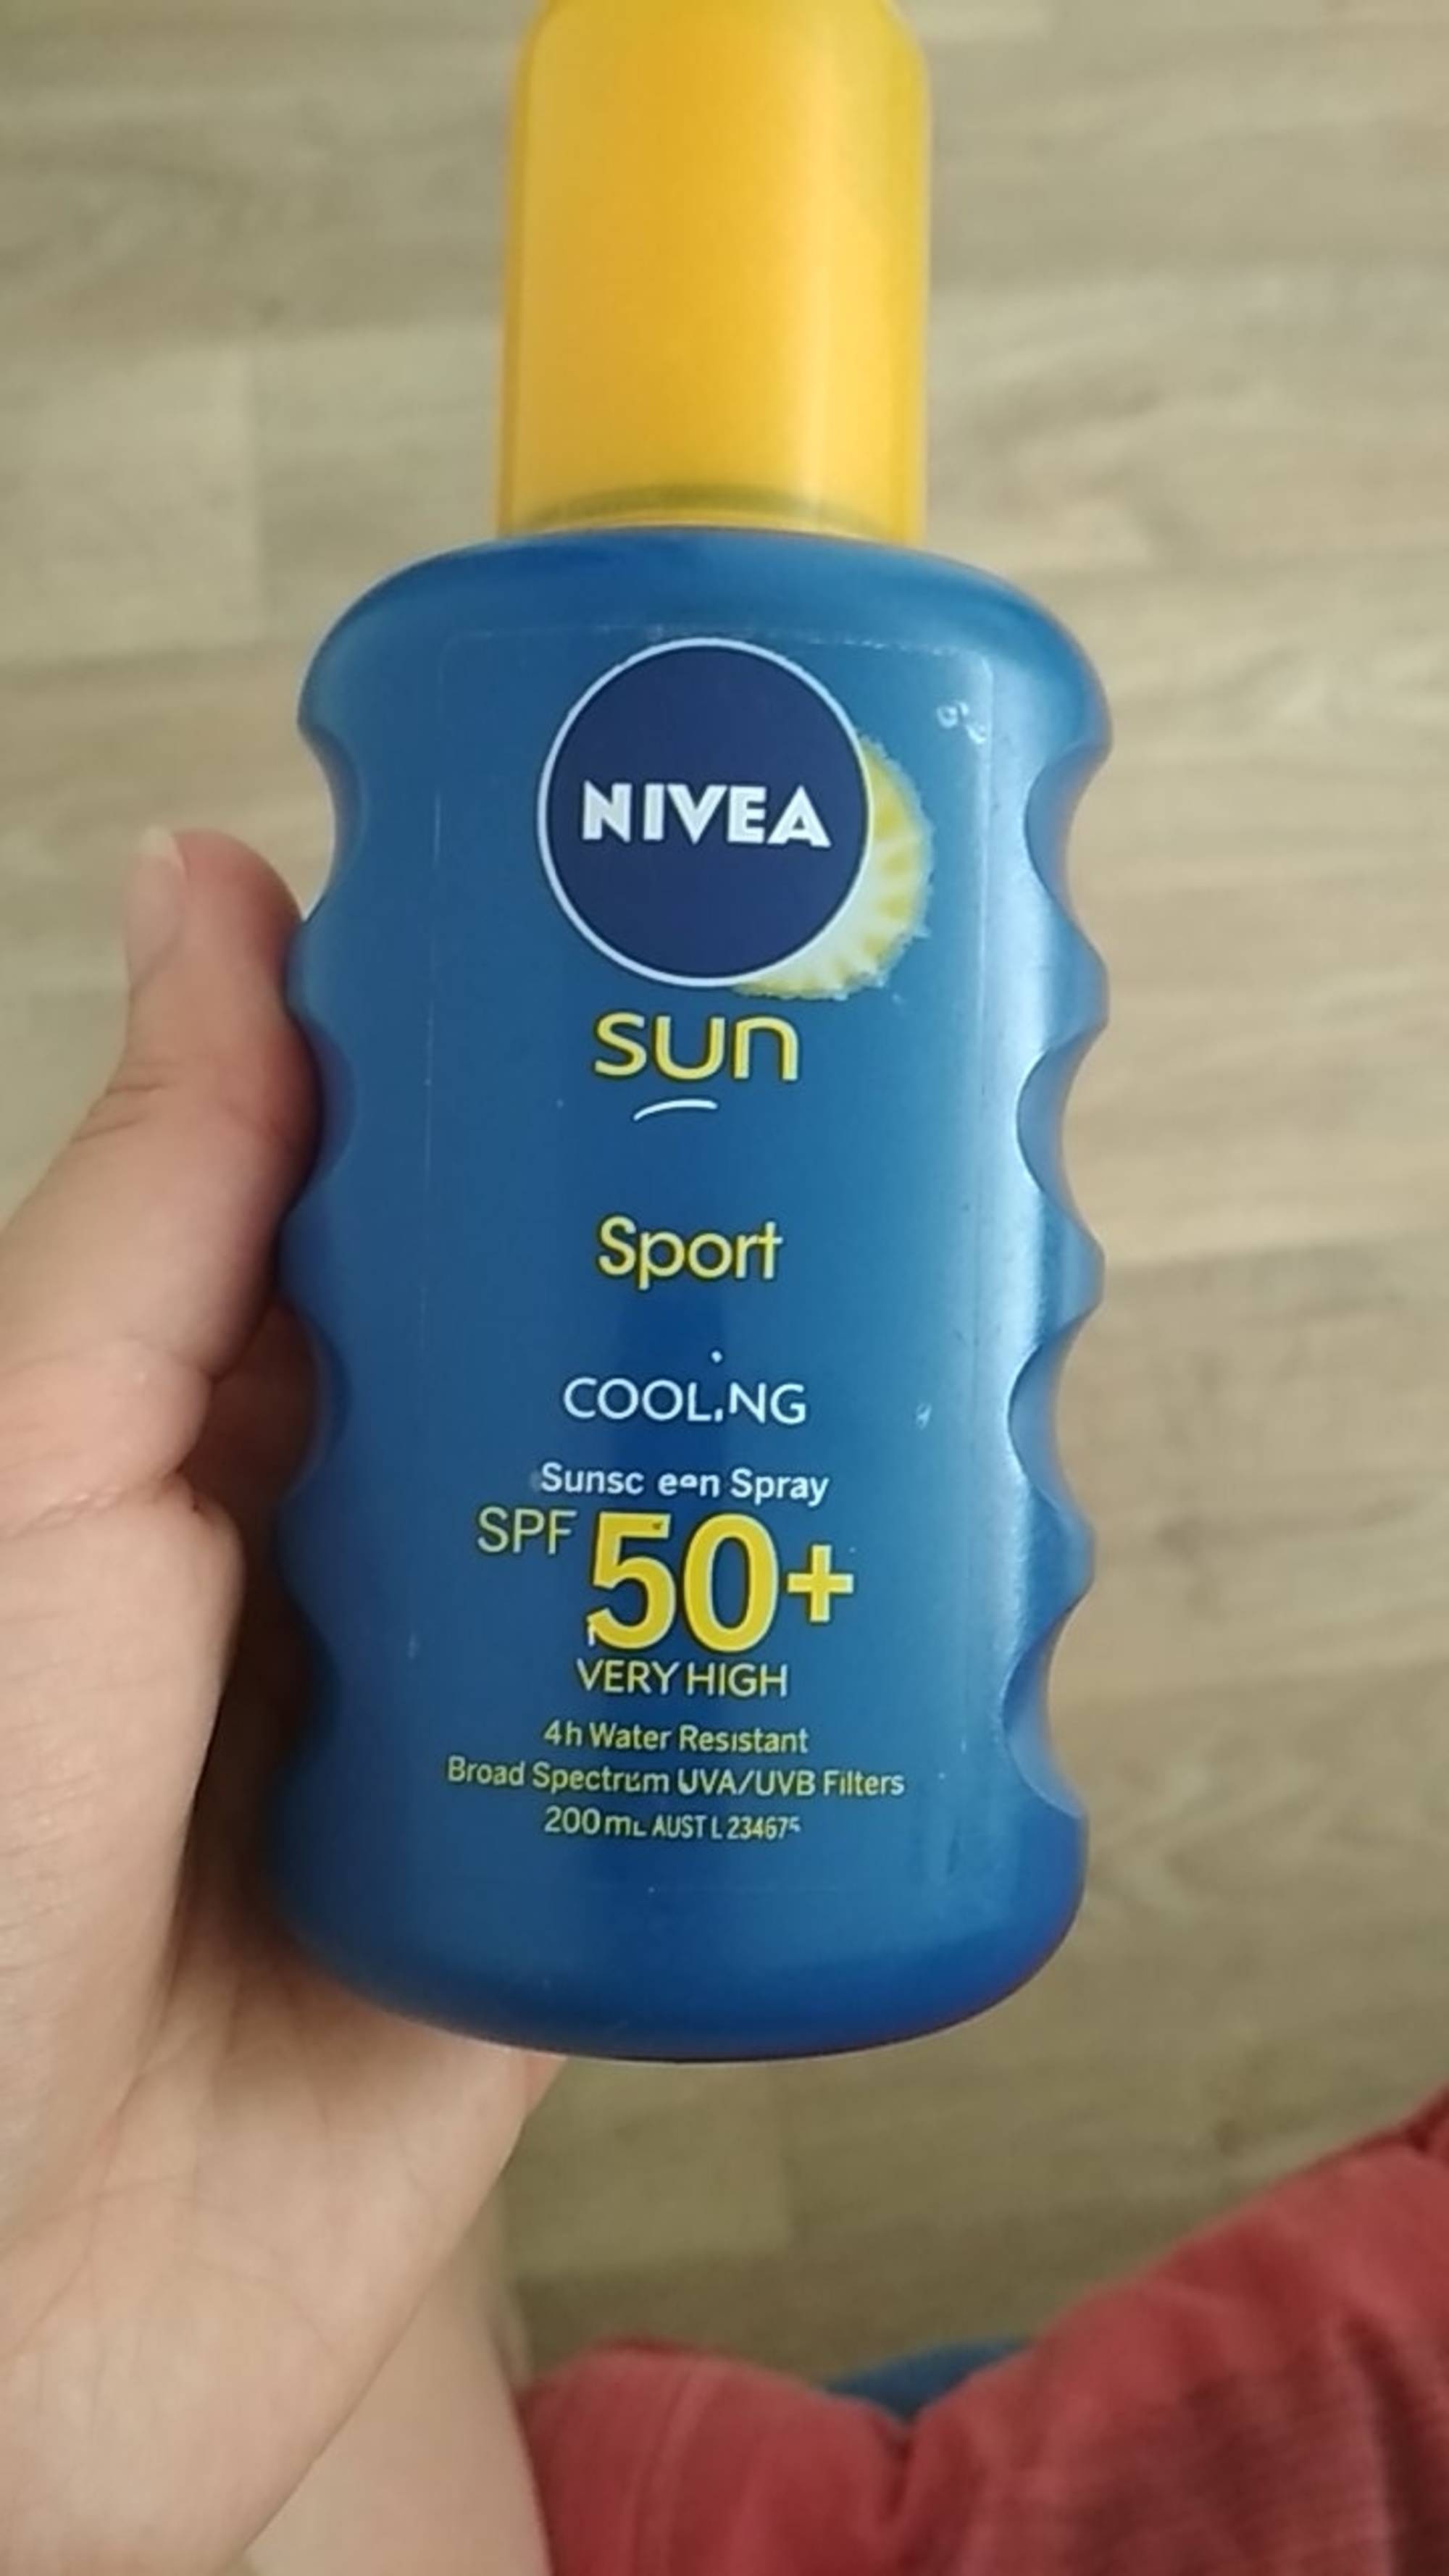 NIVEA - Nivea sun - Sport SPF 50+